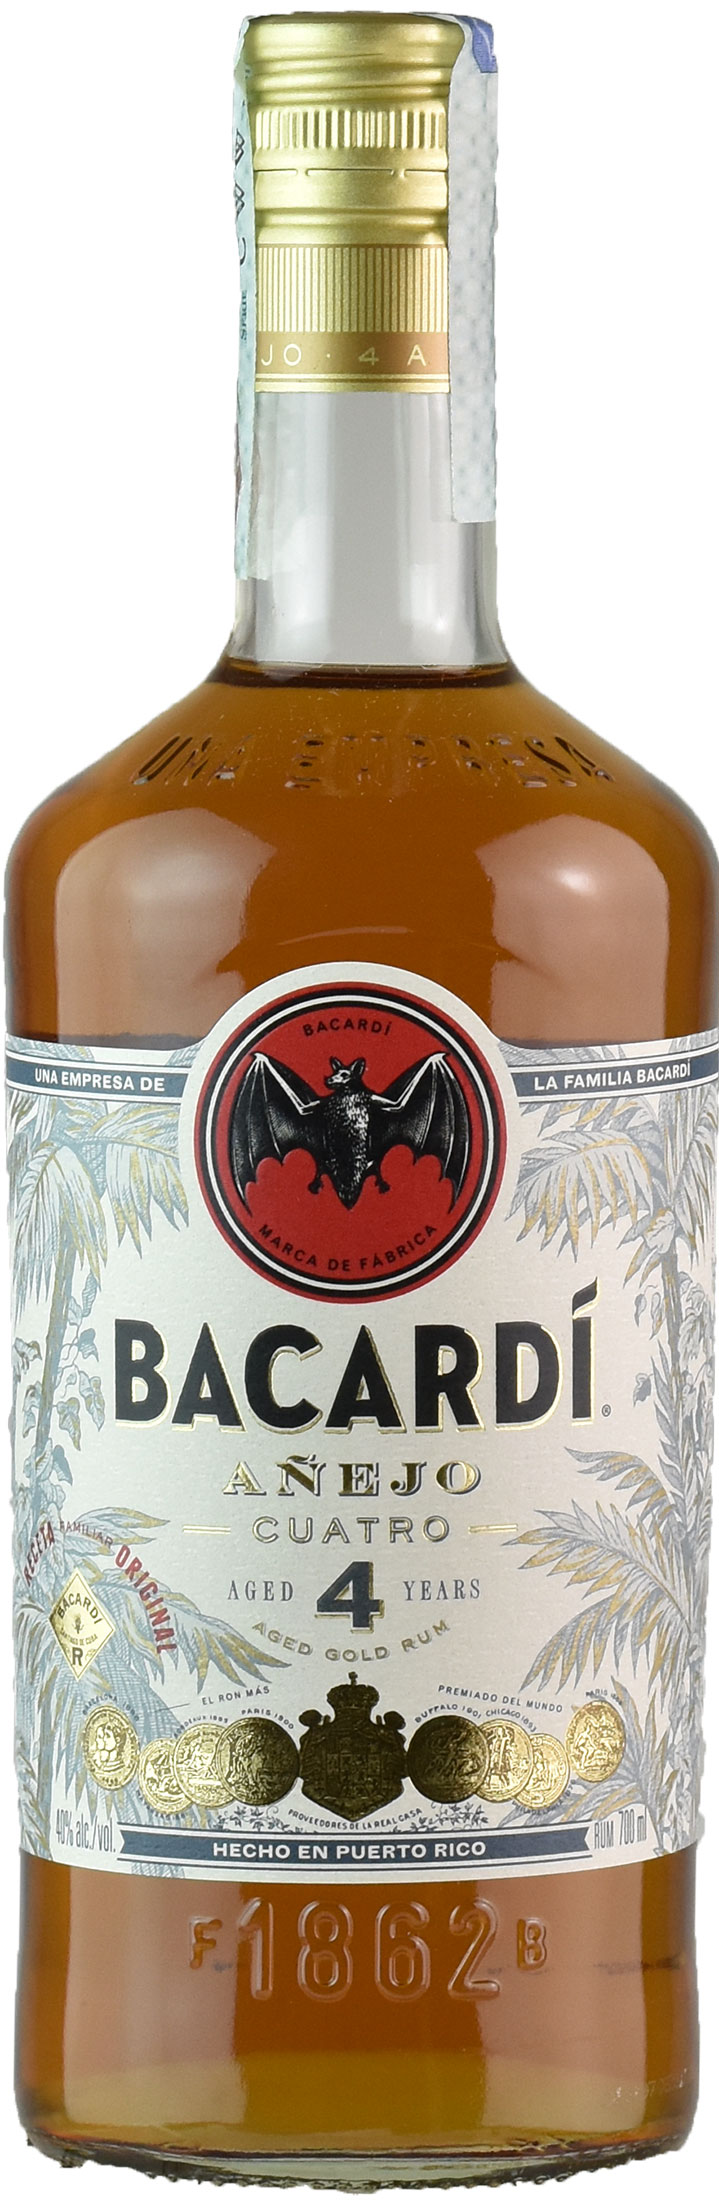 Bacardi Rum Anejo Cuatro